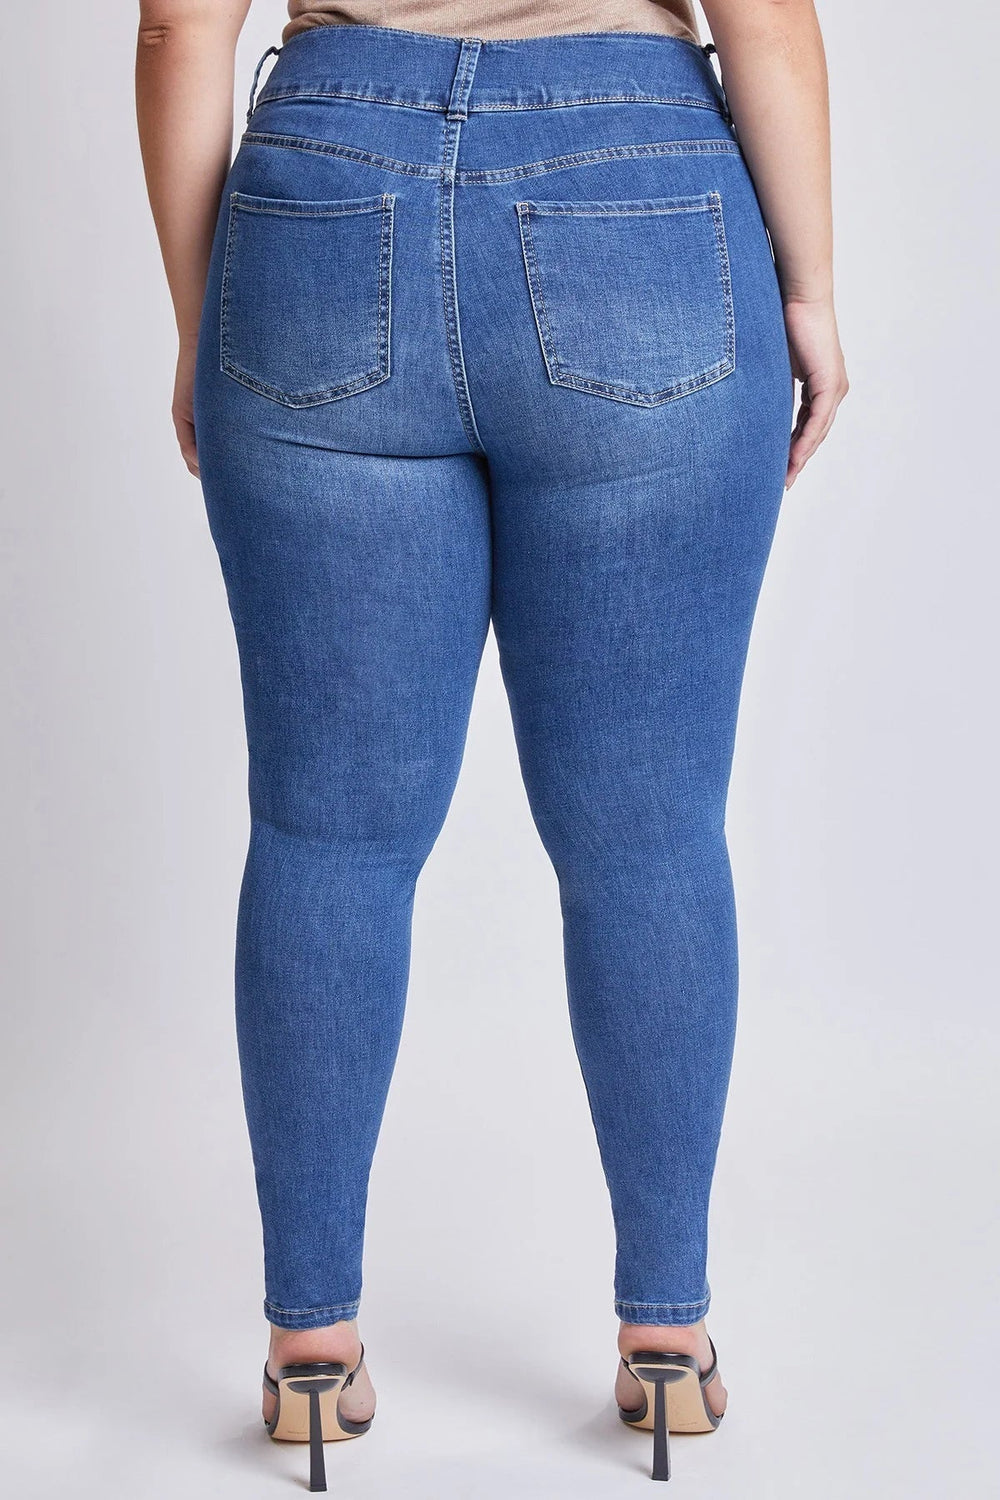 YMI Jeans Plus Size Deniz  Basic 3-Button High-Rise Skinny Jean - Dark Wash